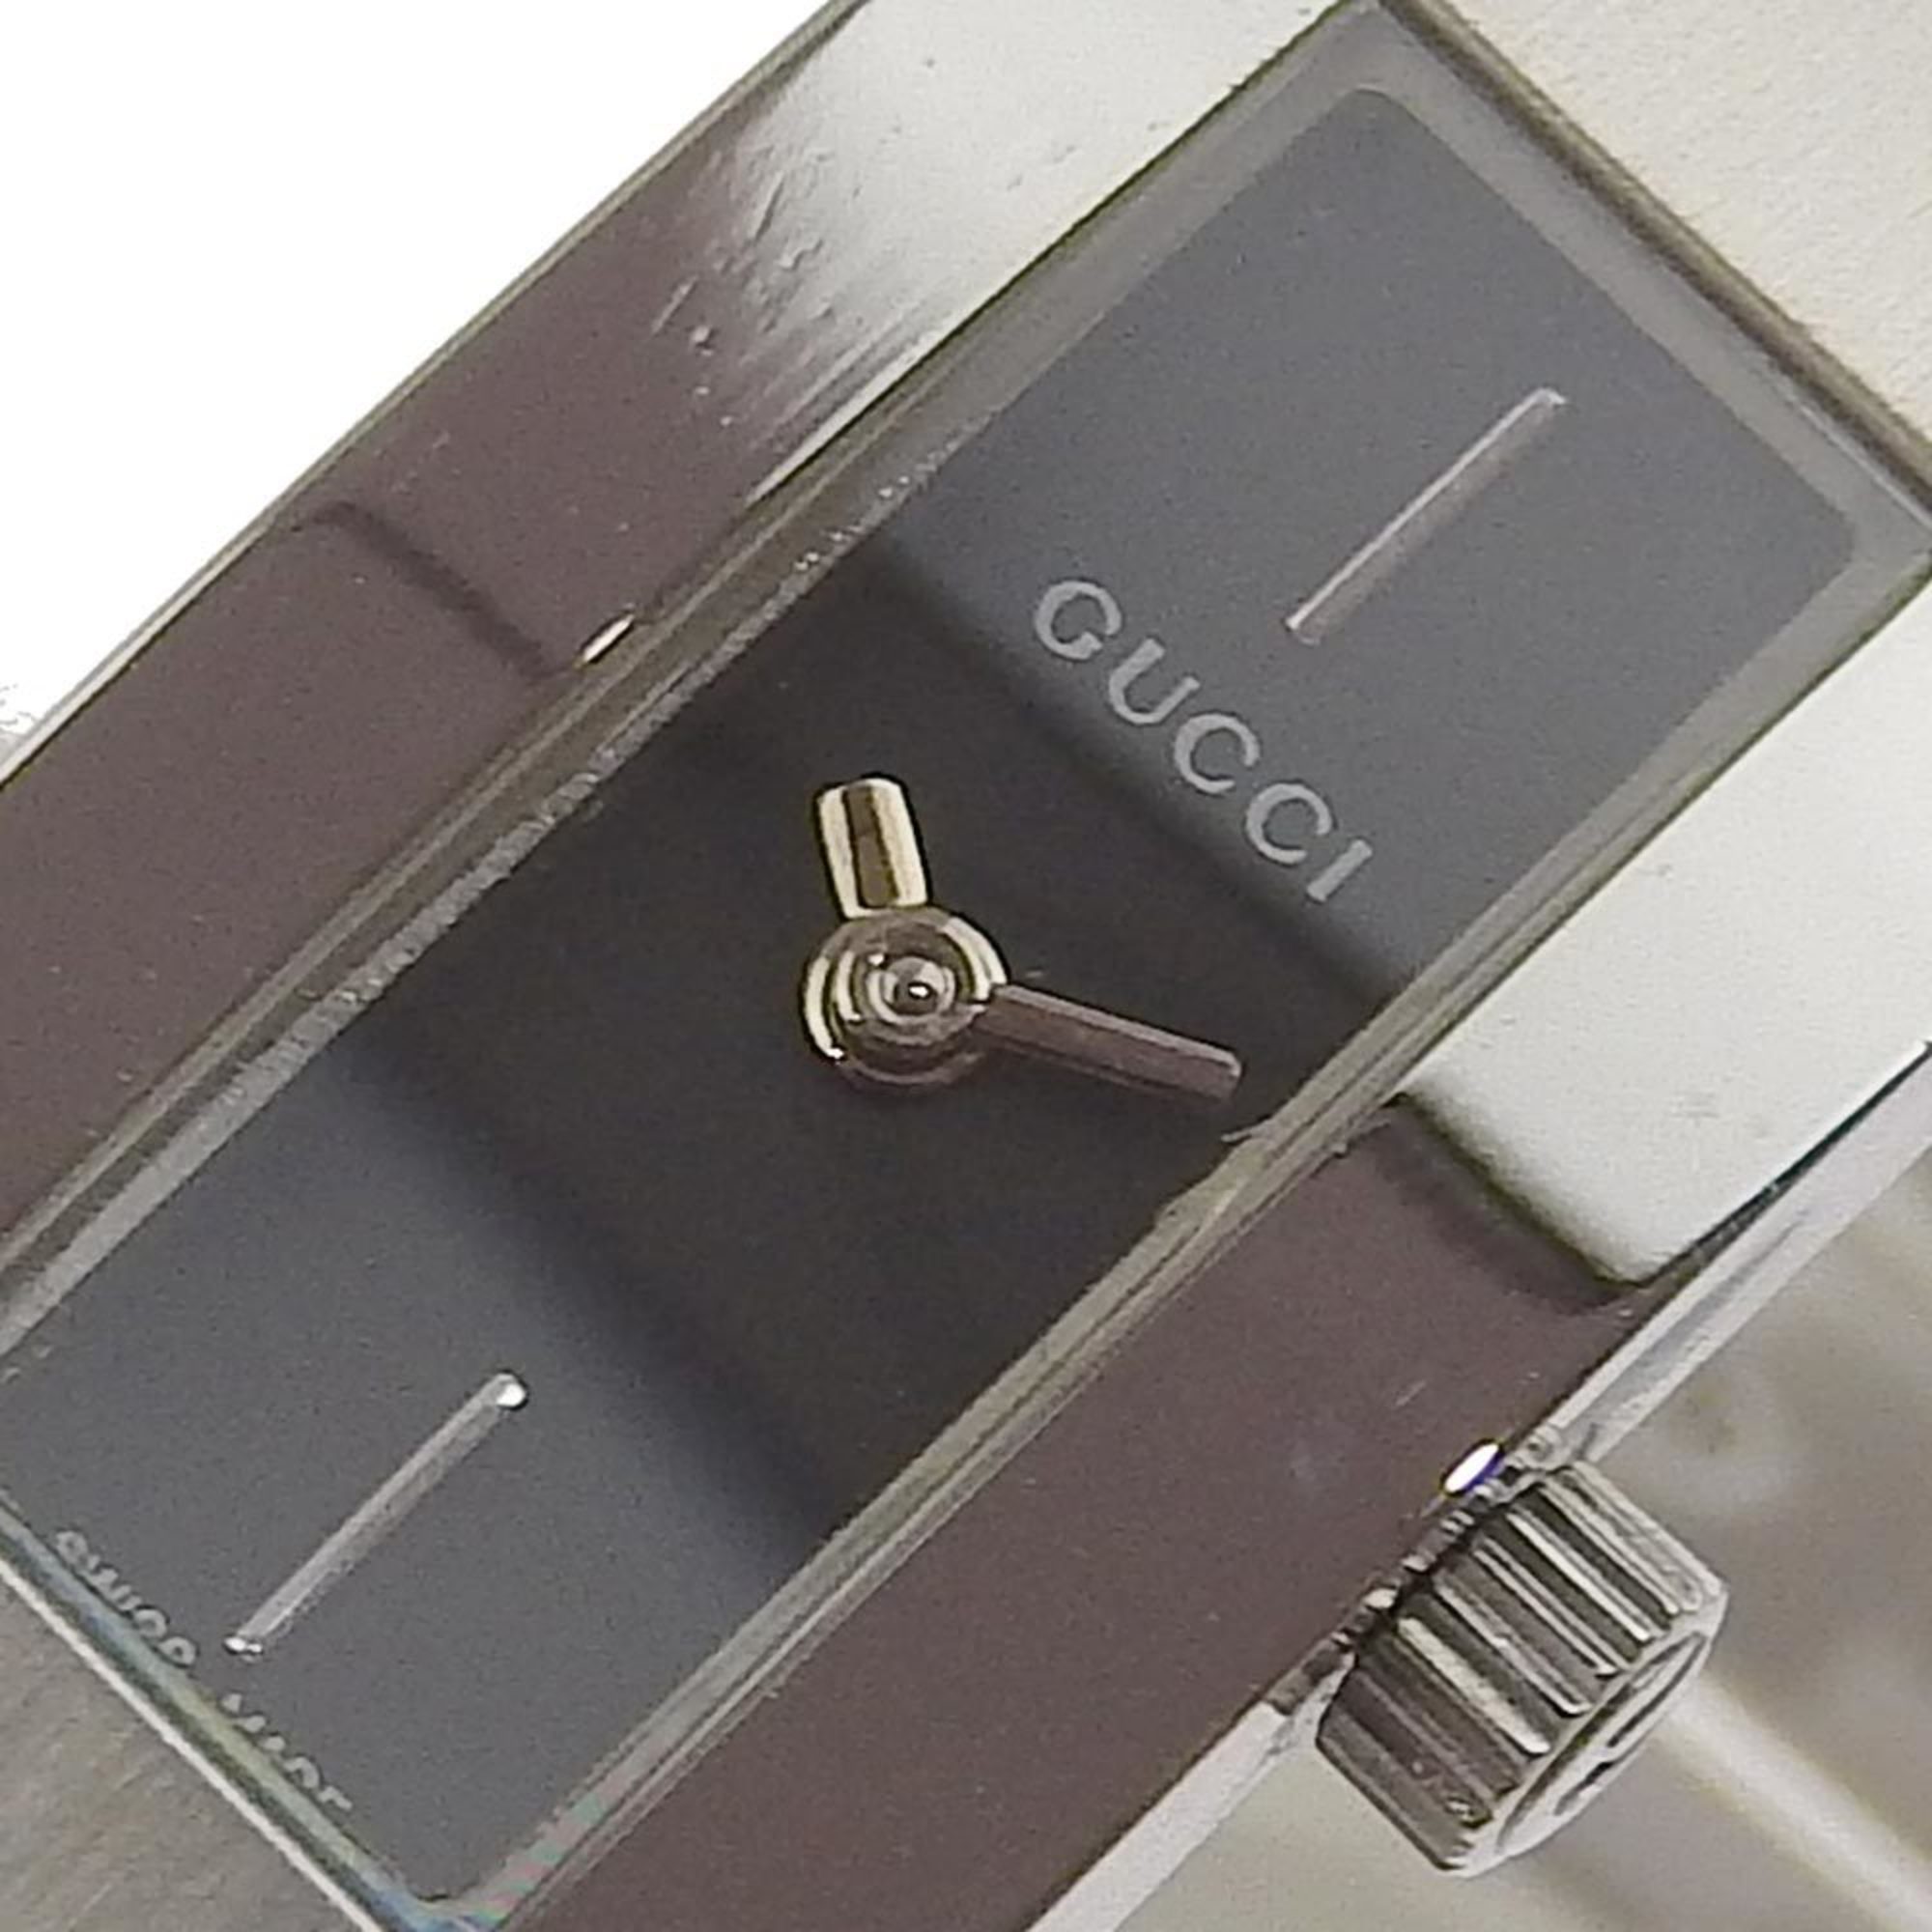 GUCCI G Logo Watch 3600M Stainless Steel Swiss Made Silver Quartz Analog Display Black Dial logo Ladies